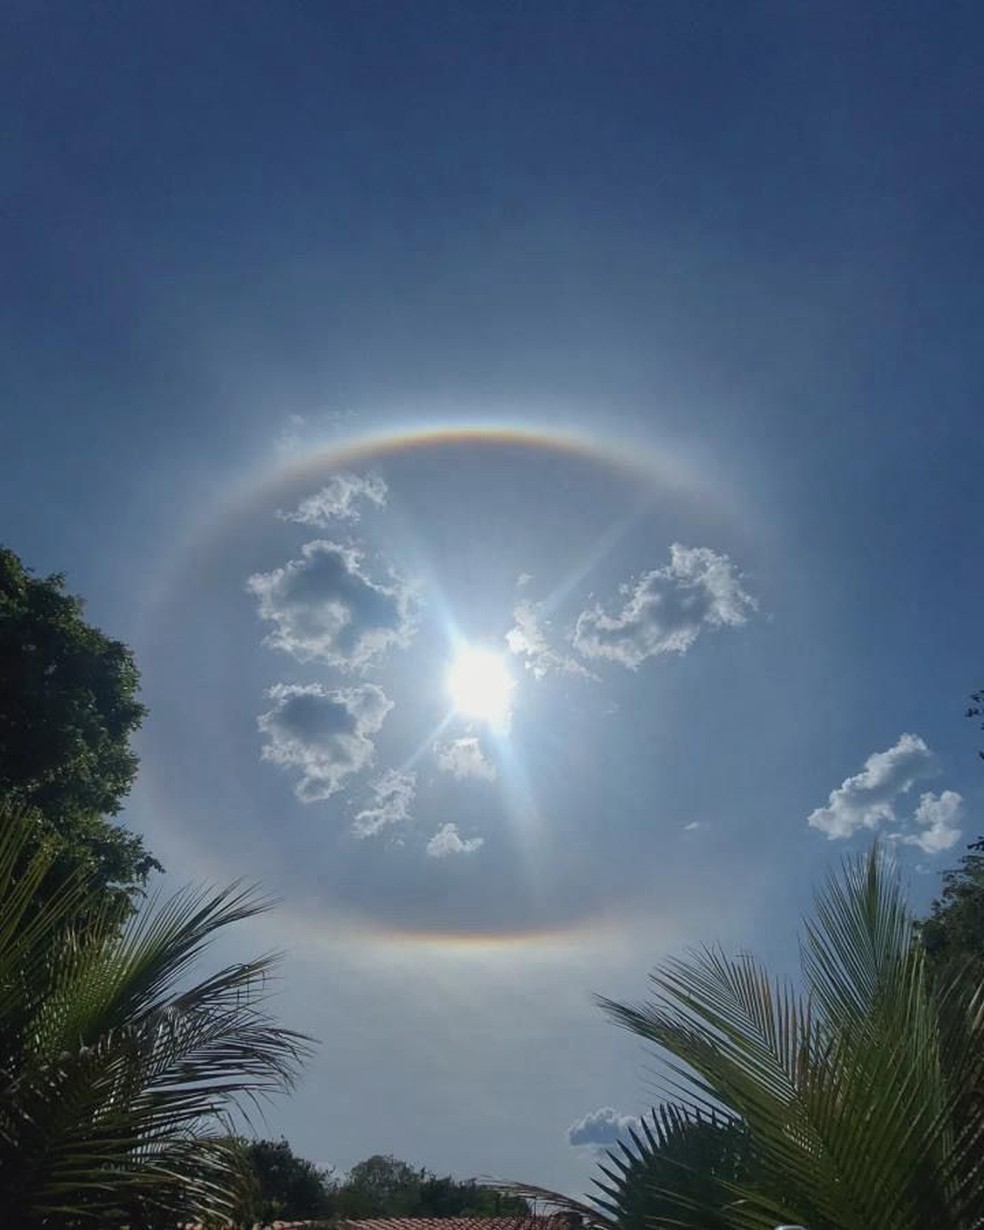 Fenômeno ao redor do sol em Teresina pode ser o anuncio de chuva 